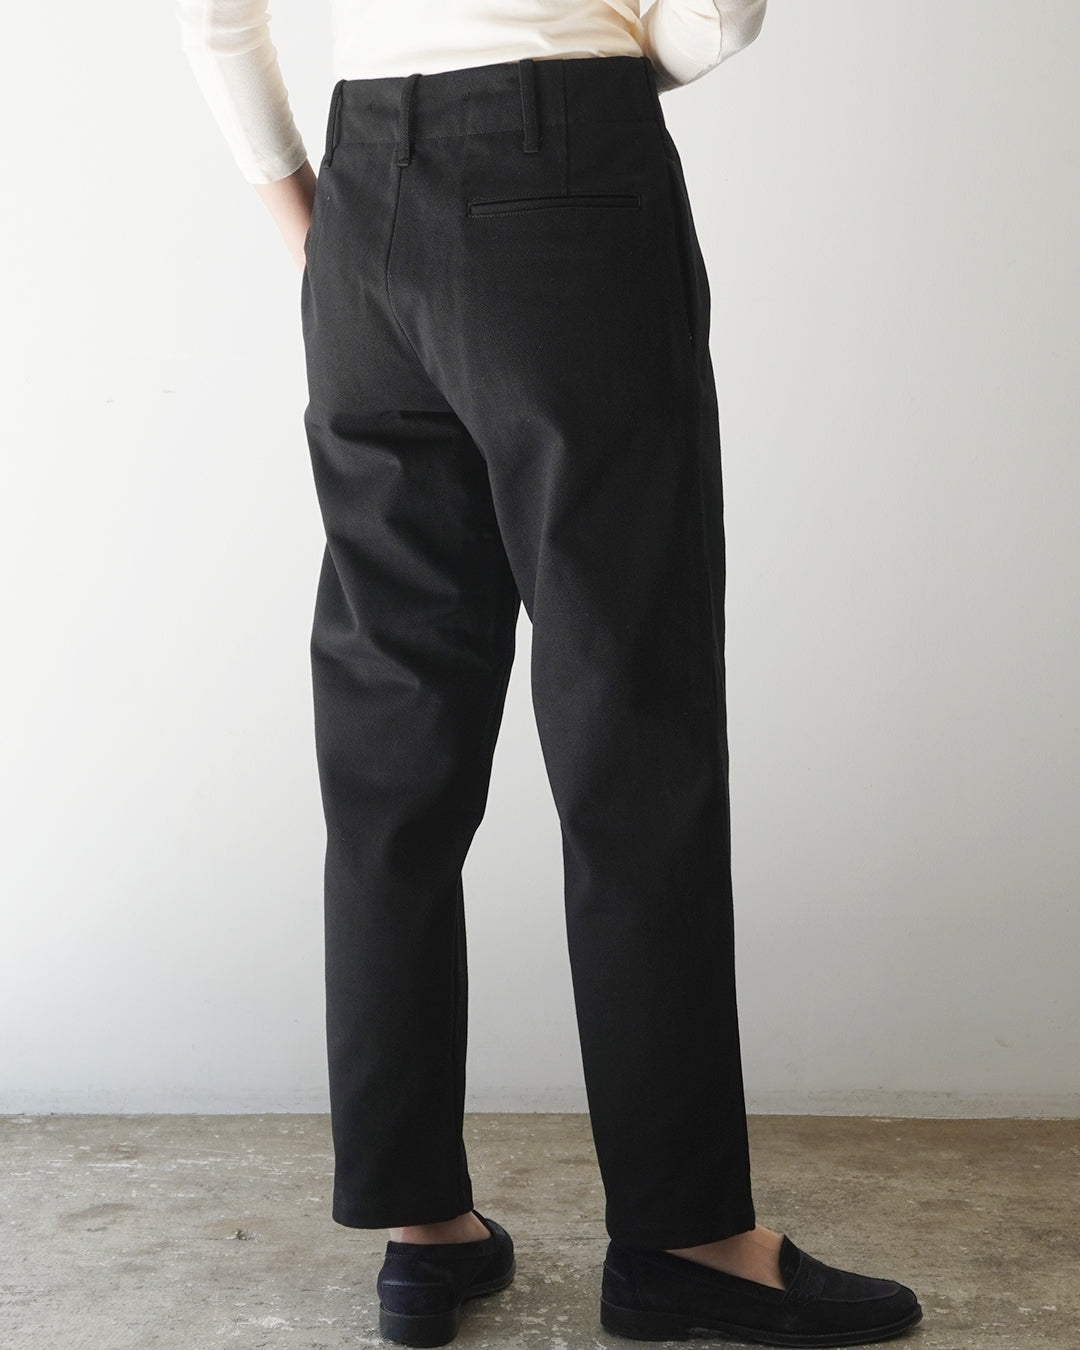 TUKI s/s slim trousers / black / katsuraghi drill / size1